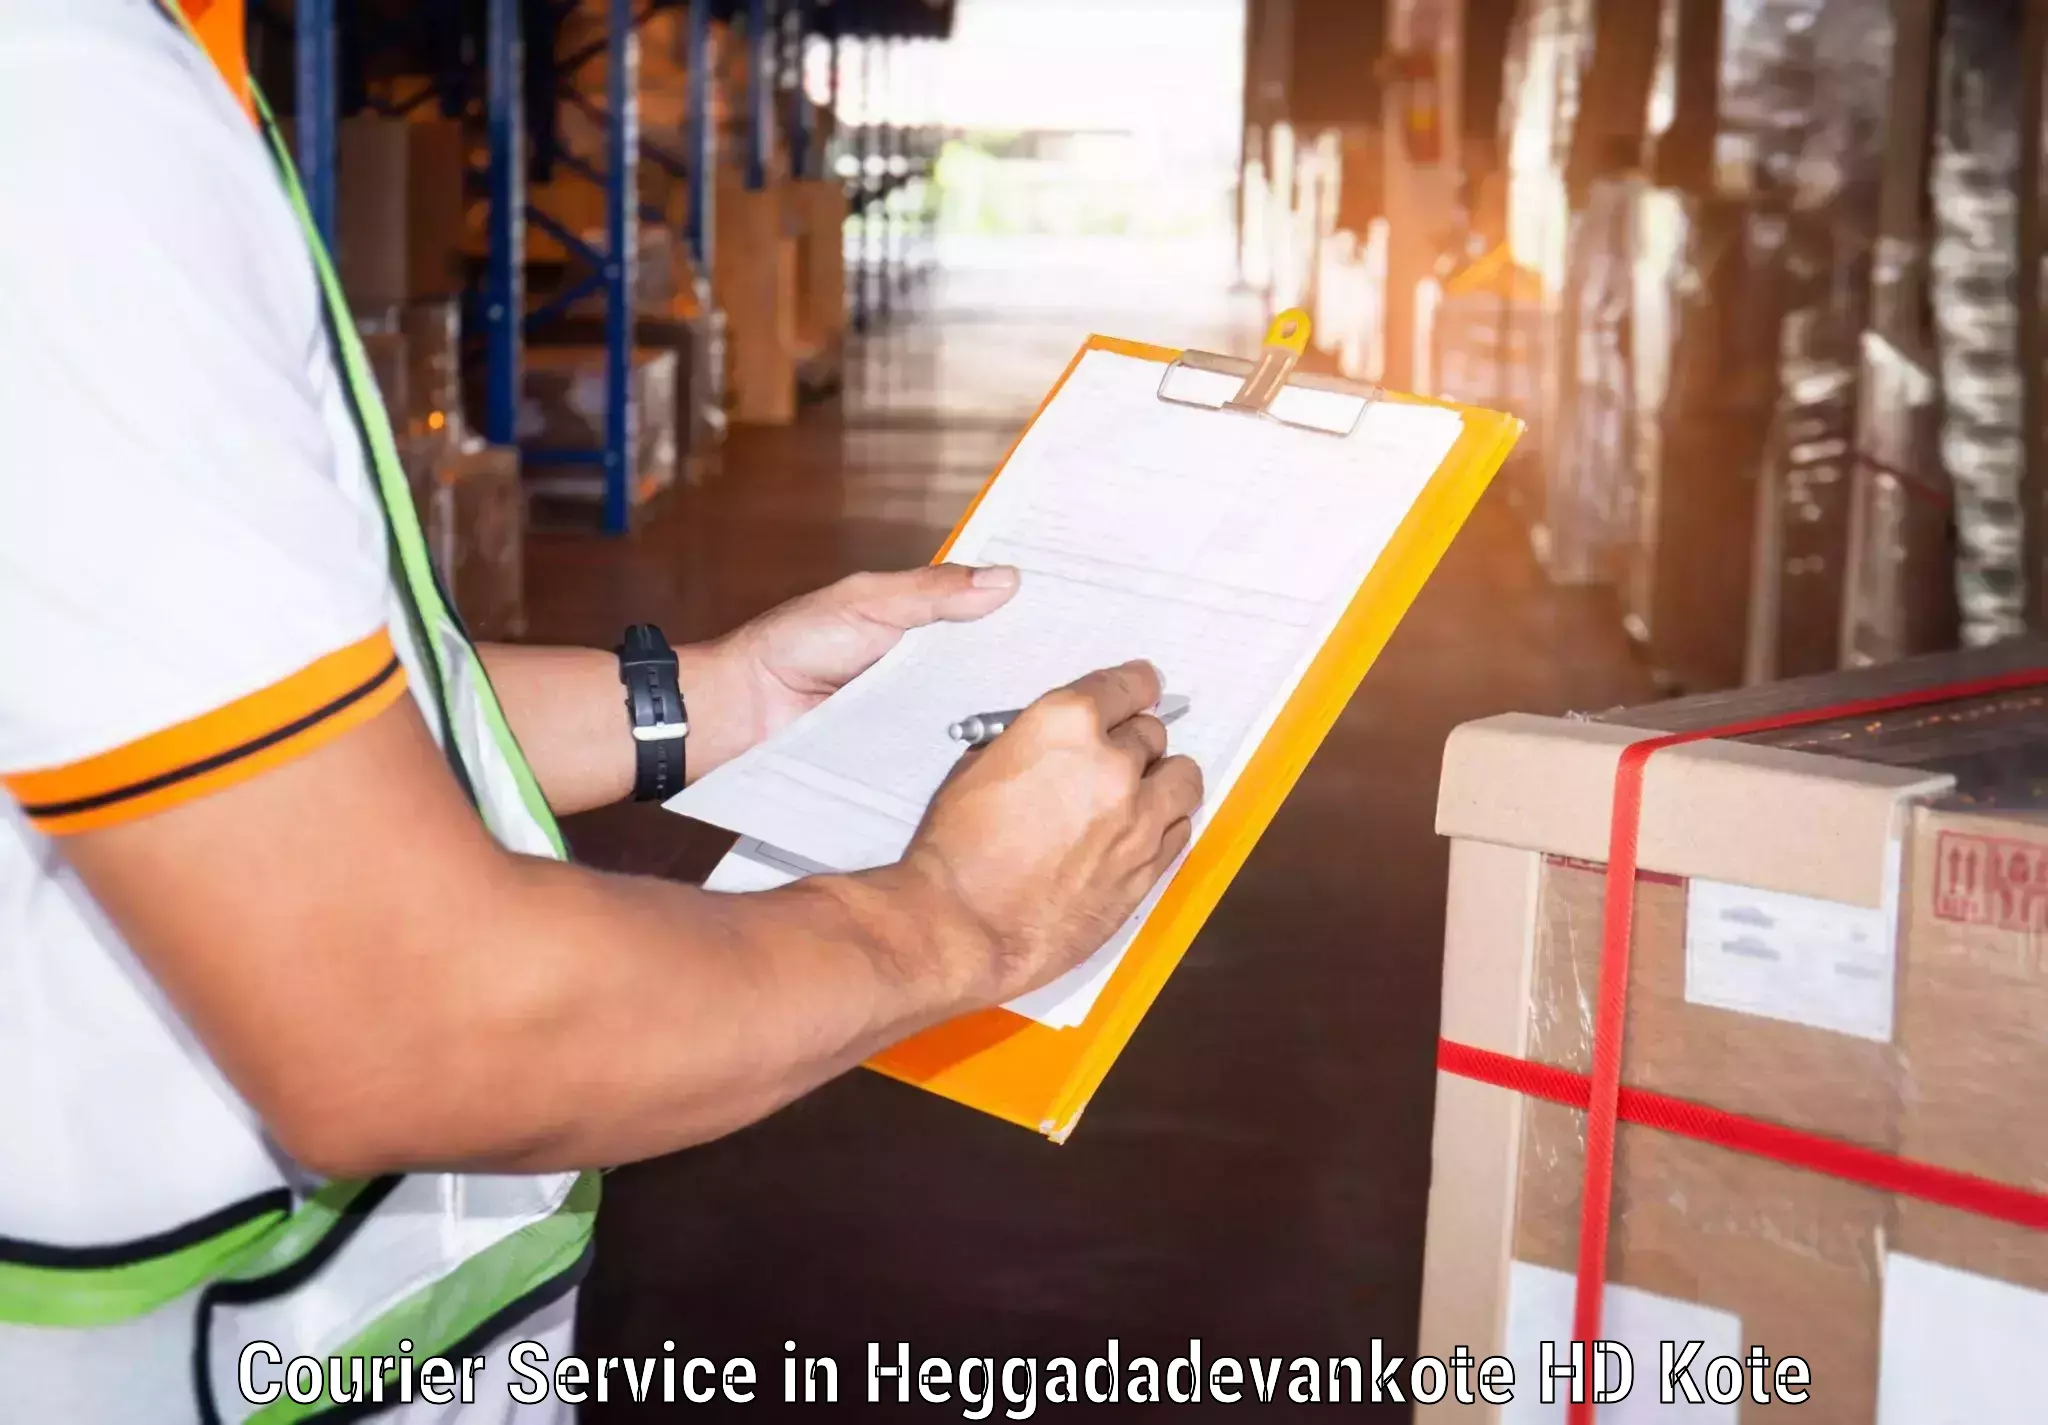 Express delivery capabilities in Heggadadevankote HD Kote